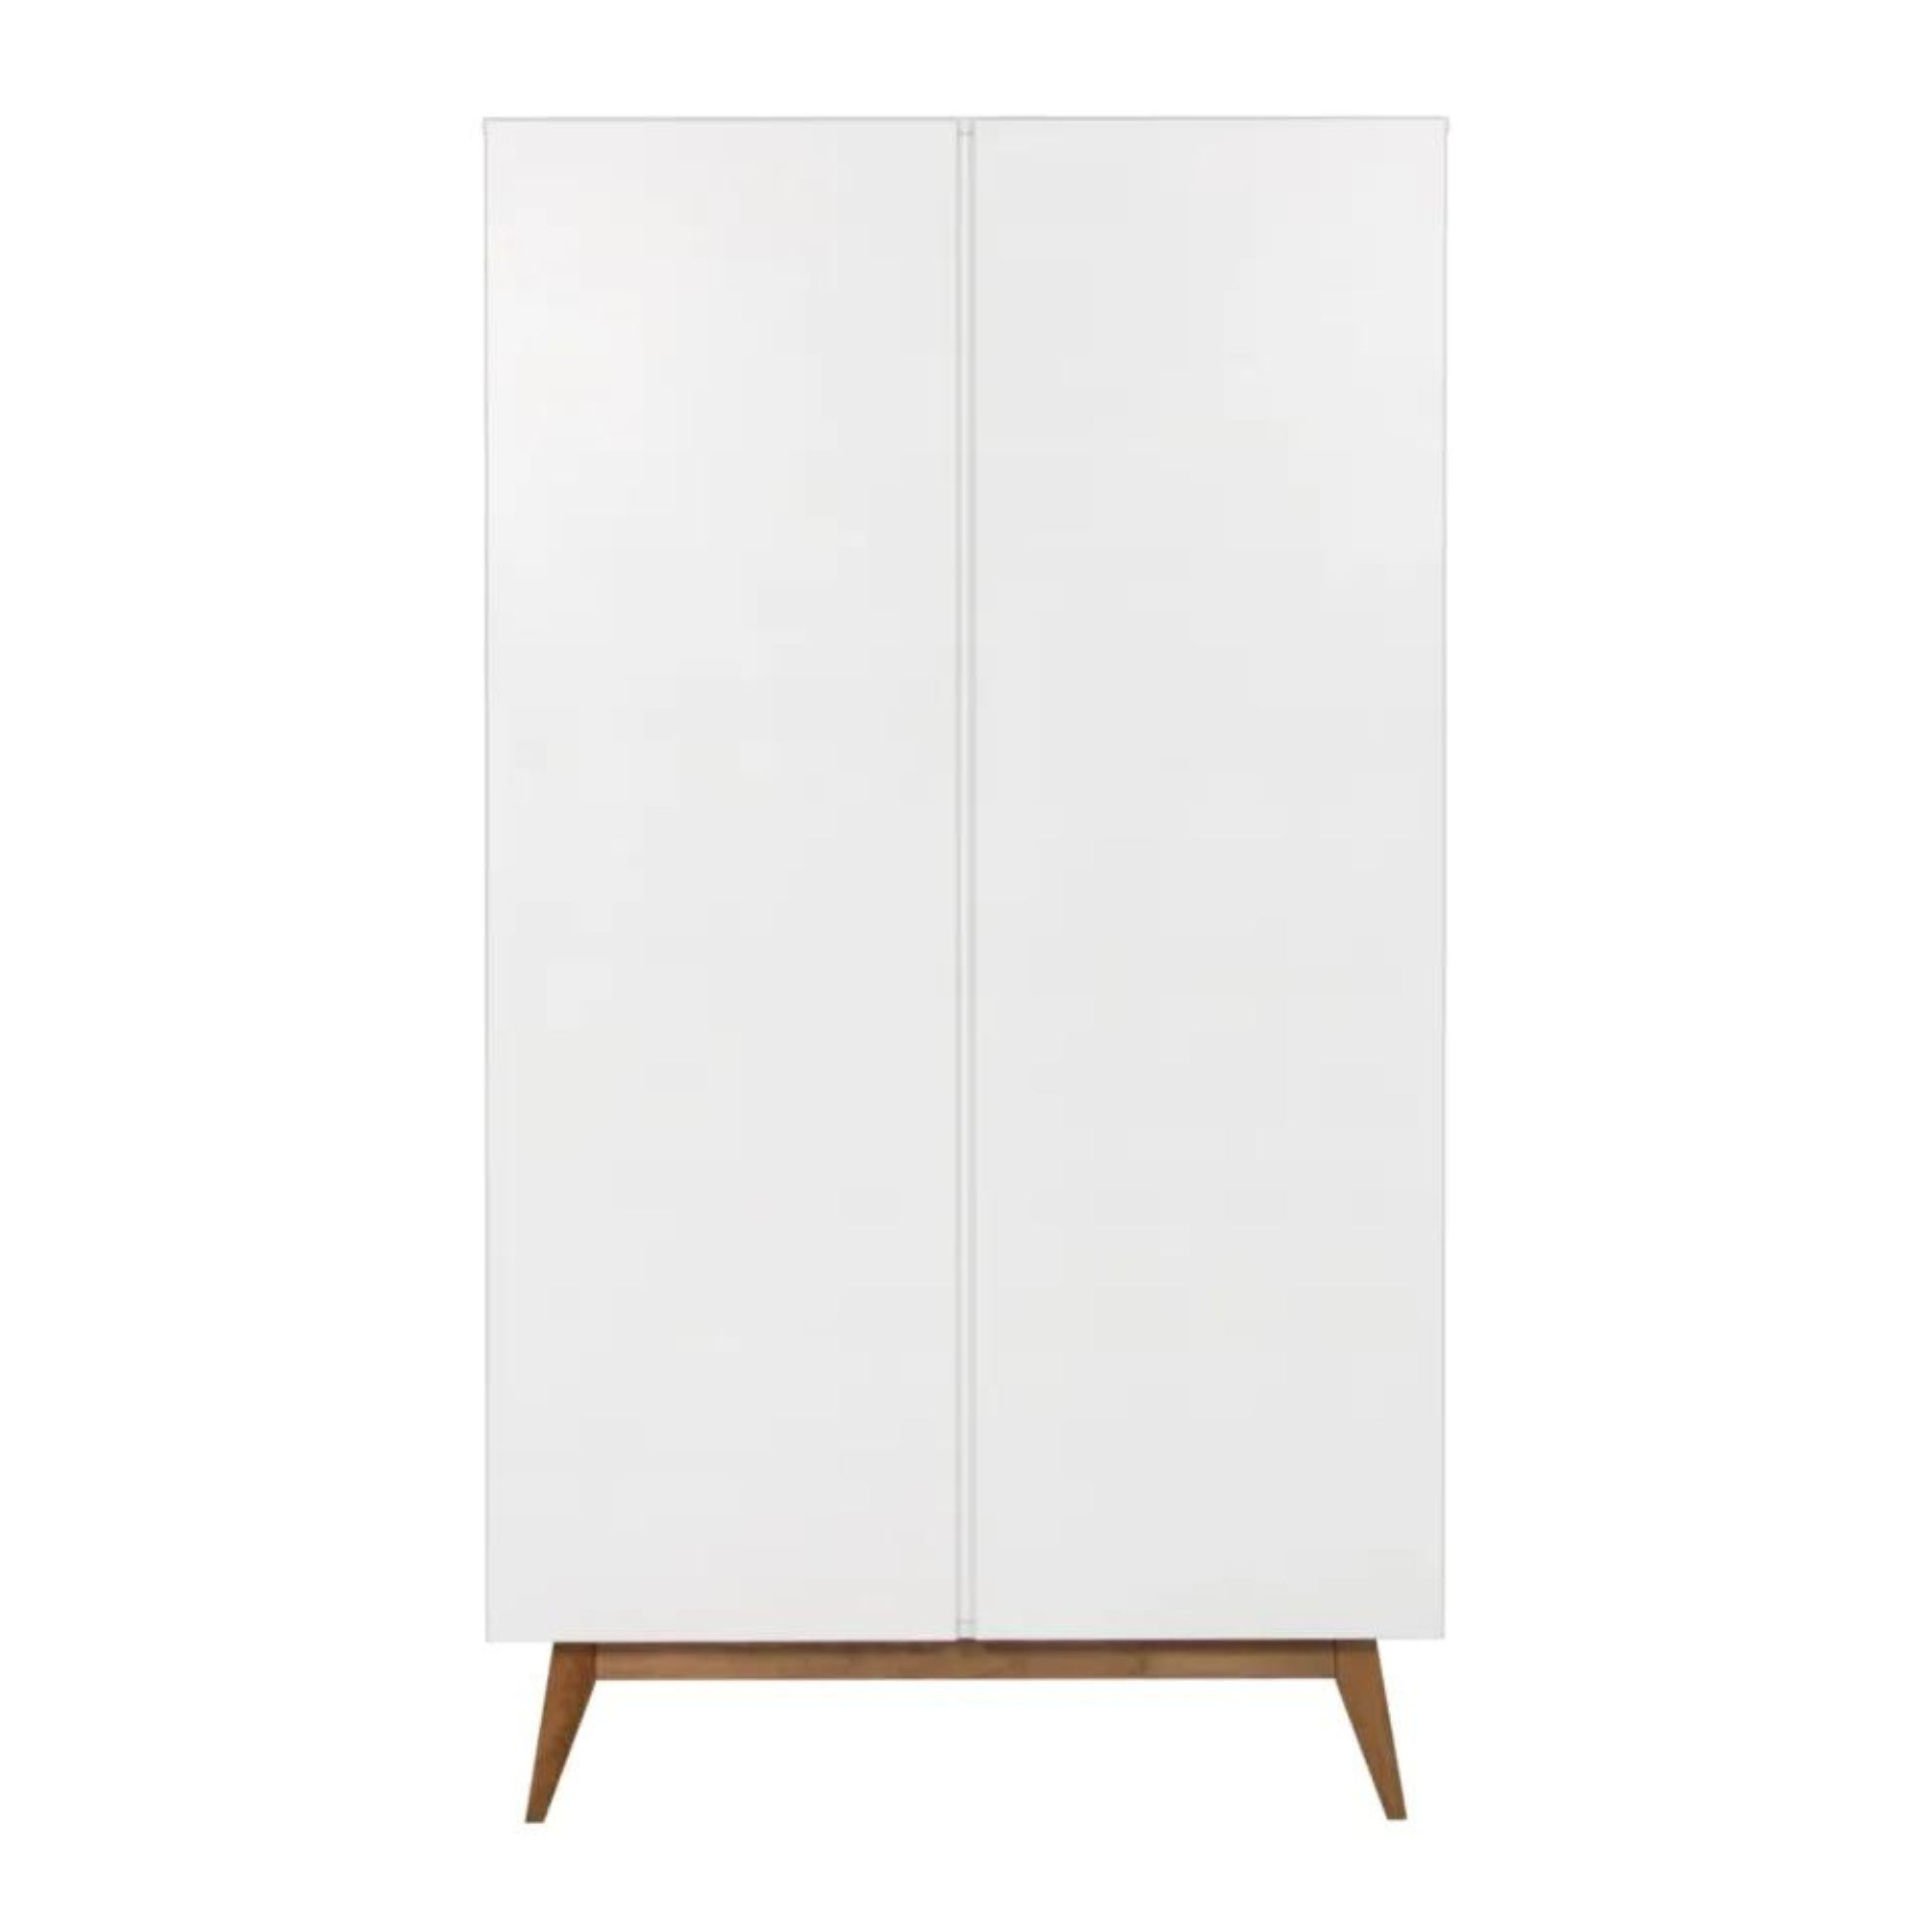 Quax cabinet Trendy White - 2 doors